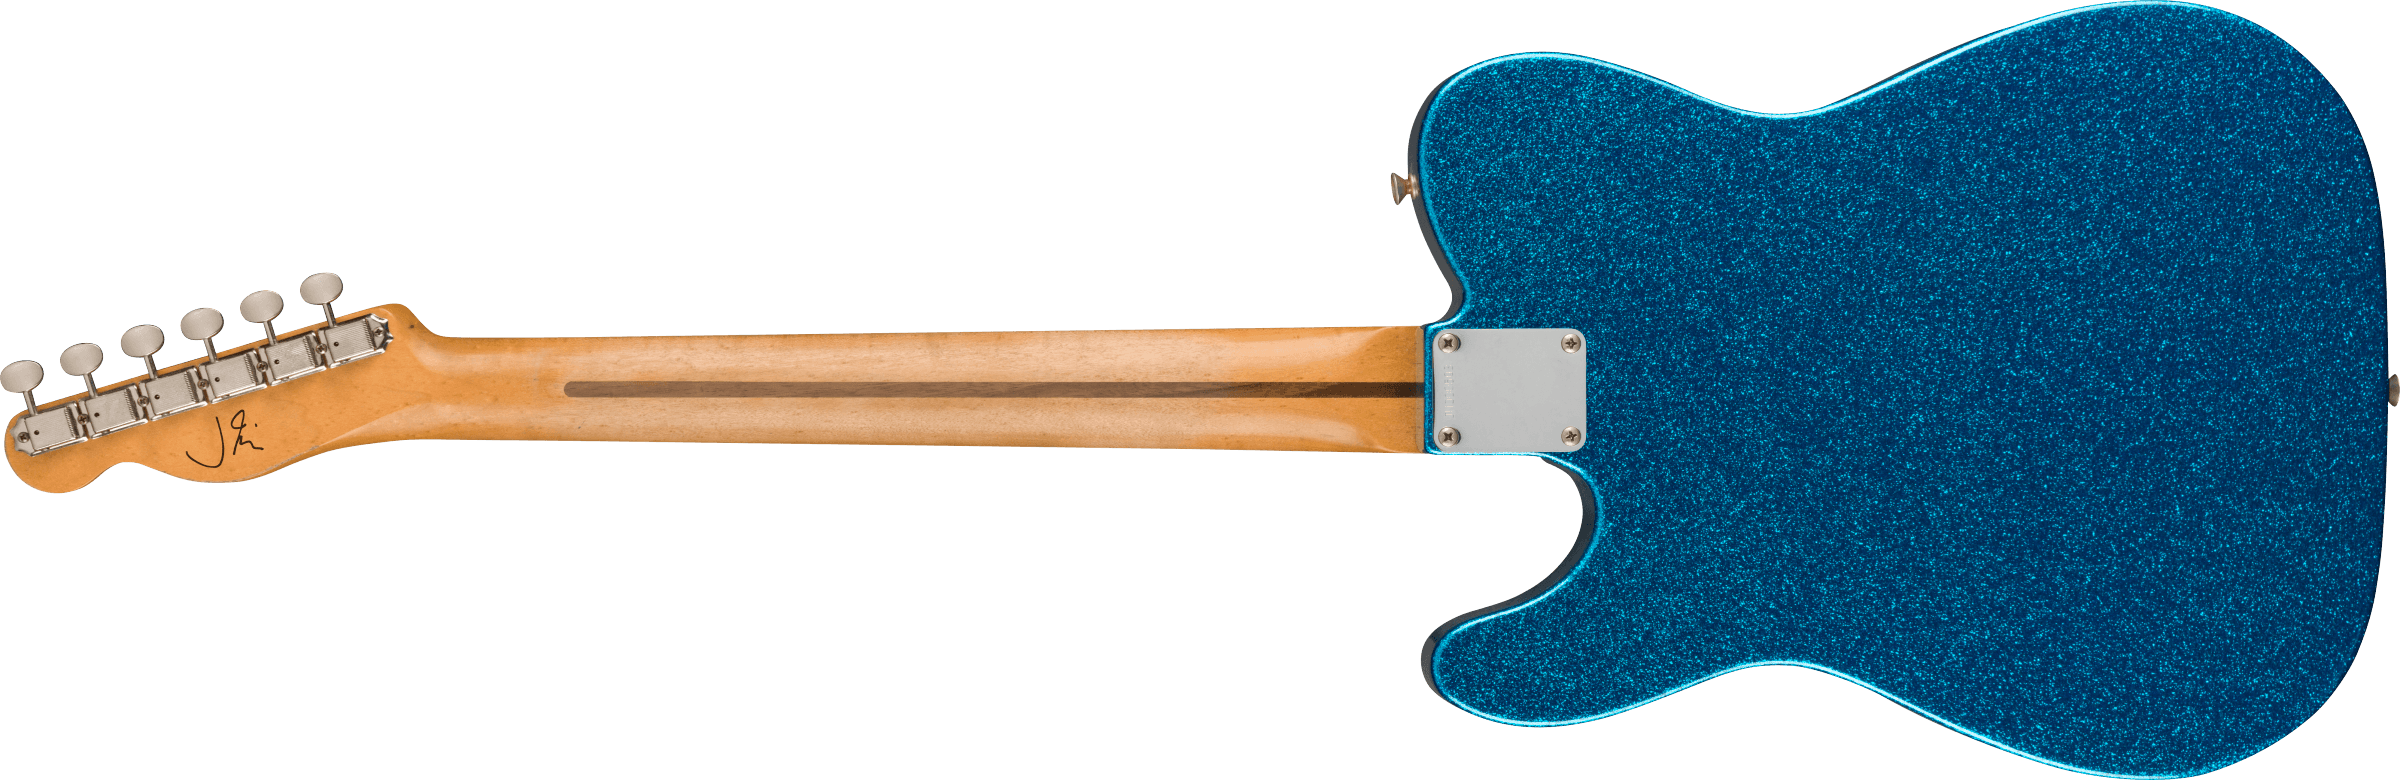 Fender Telecaster J. Mascis Signature 2s Ht Mn - Sparkle Blue - E-Gitarre in Teleform - Variation 1